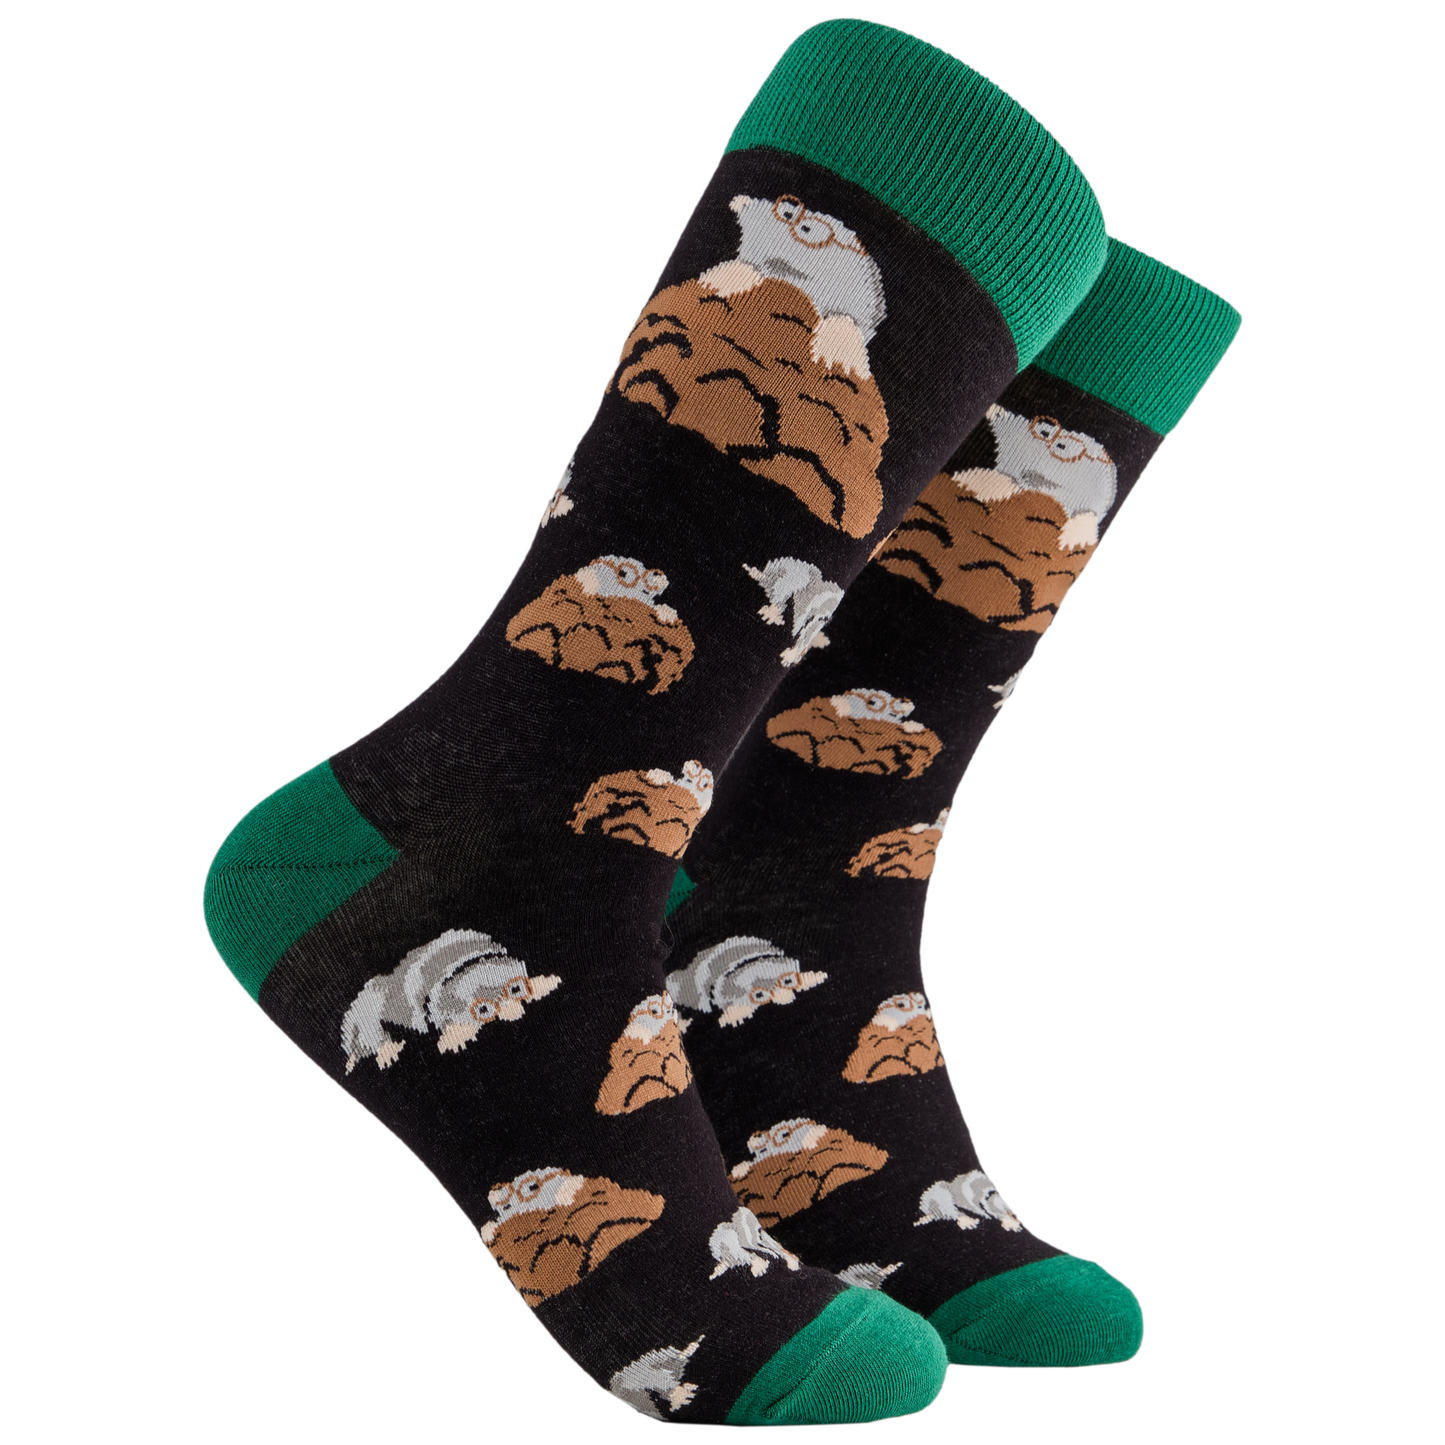 Mole Socks. A pair of socks depicting adorable moles digging. Black legs, green cuff, heel and toe.